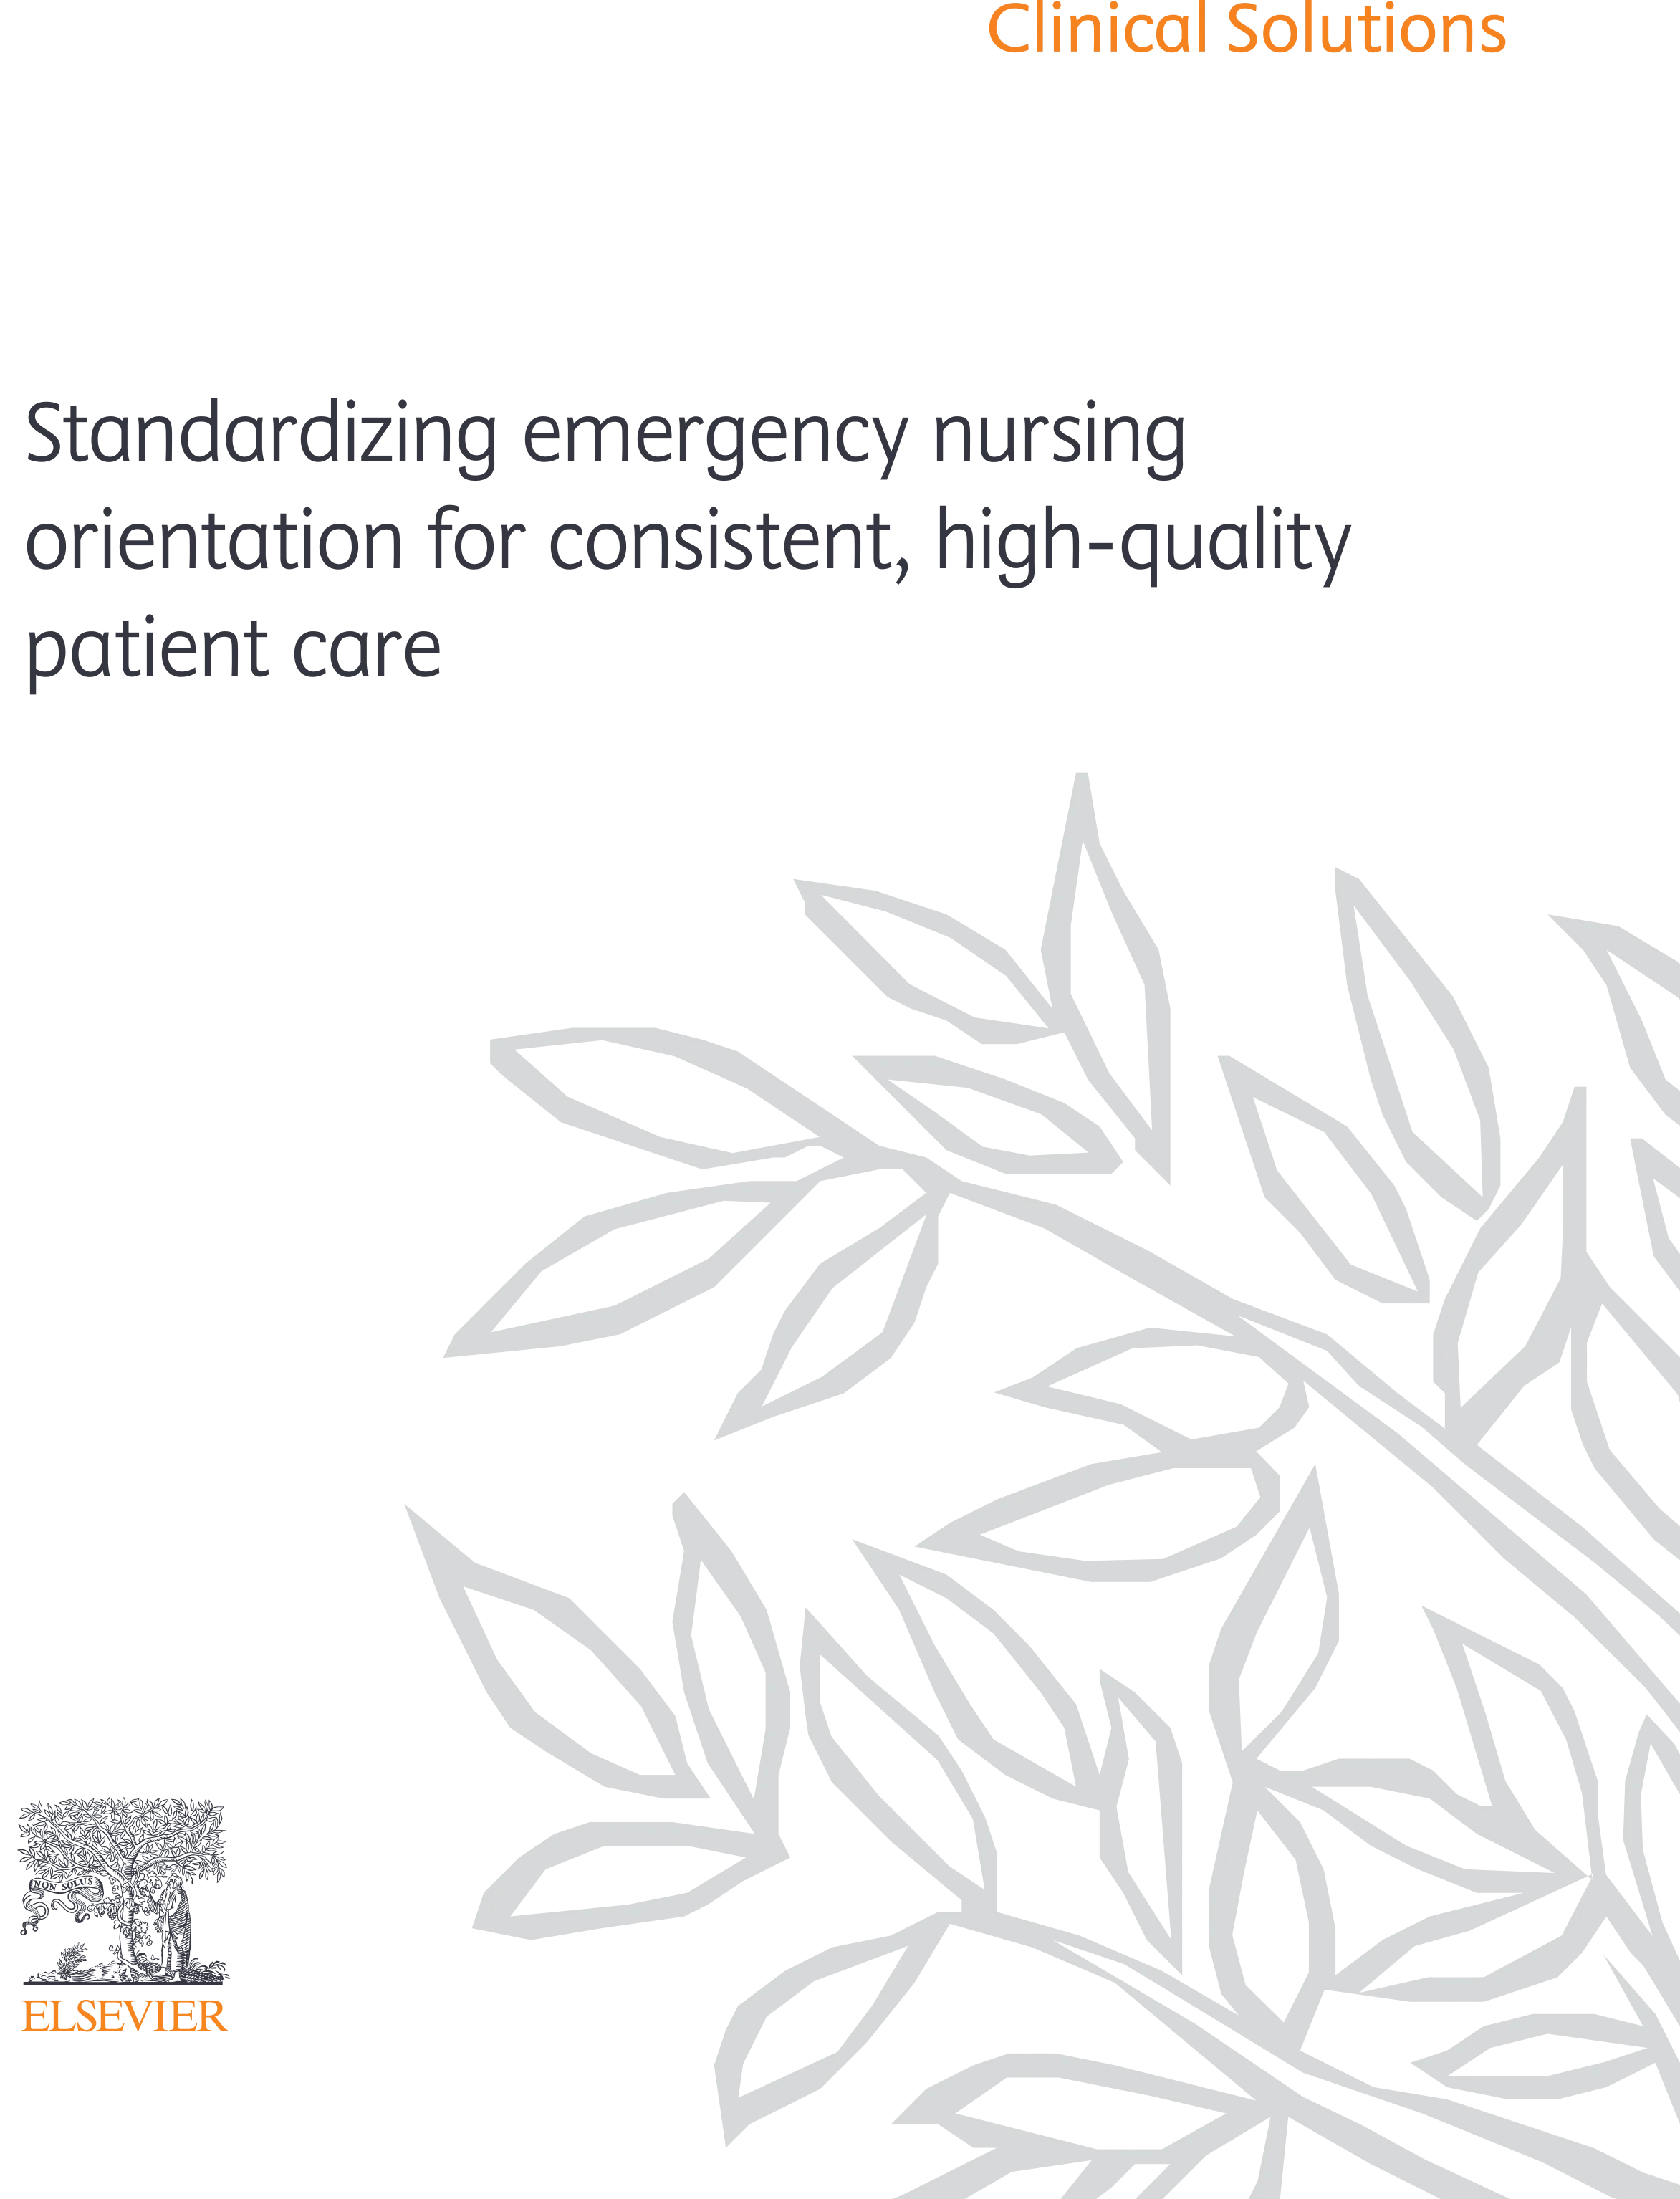 Standardizing Emergency Nursing Orientation for Consistent, High-Quality Patient Care